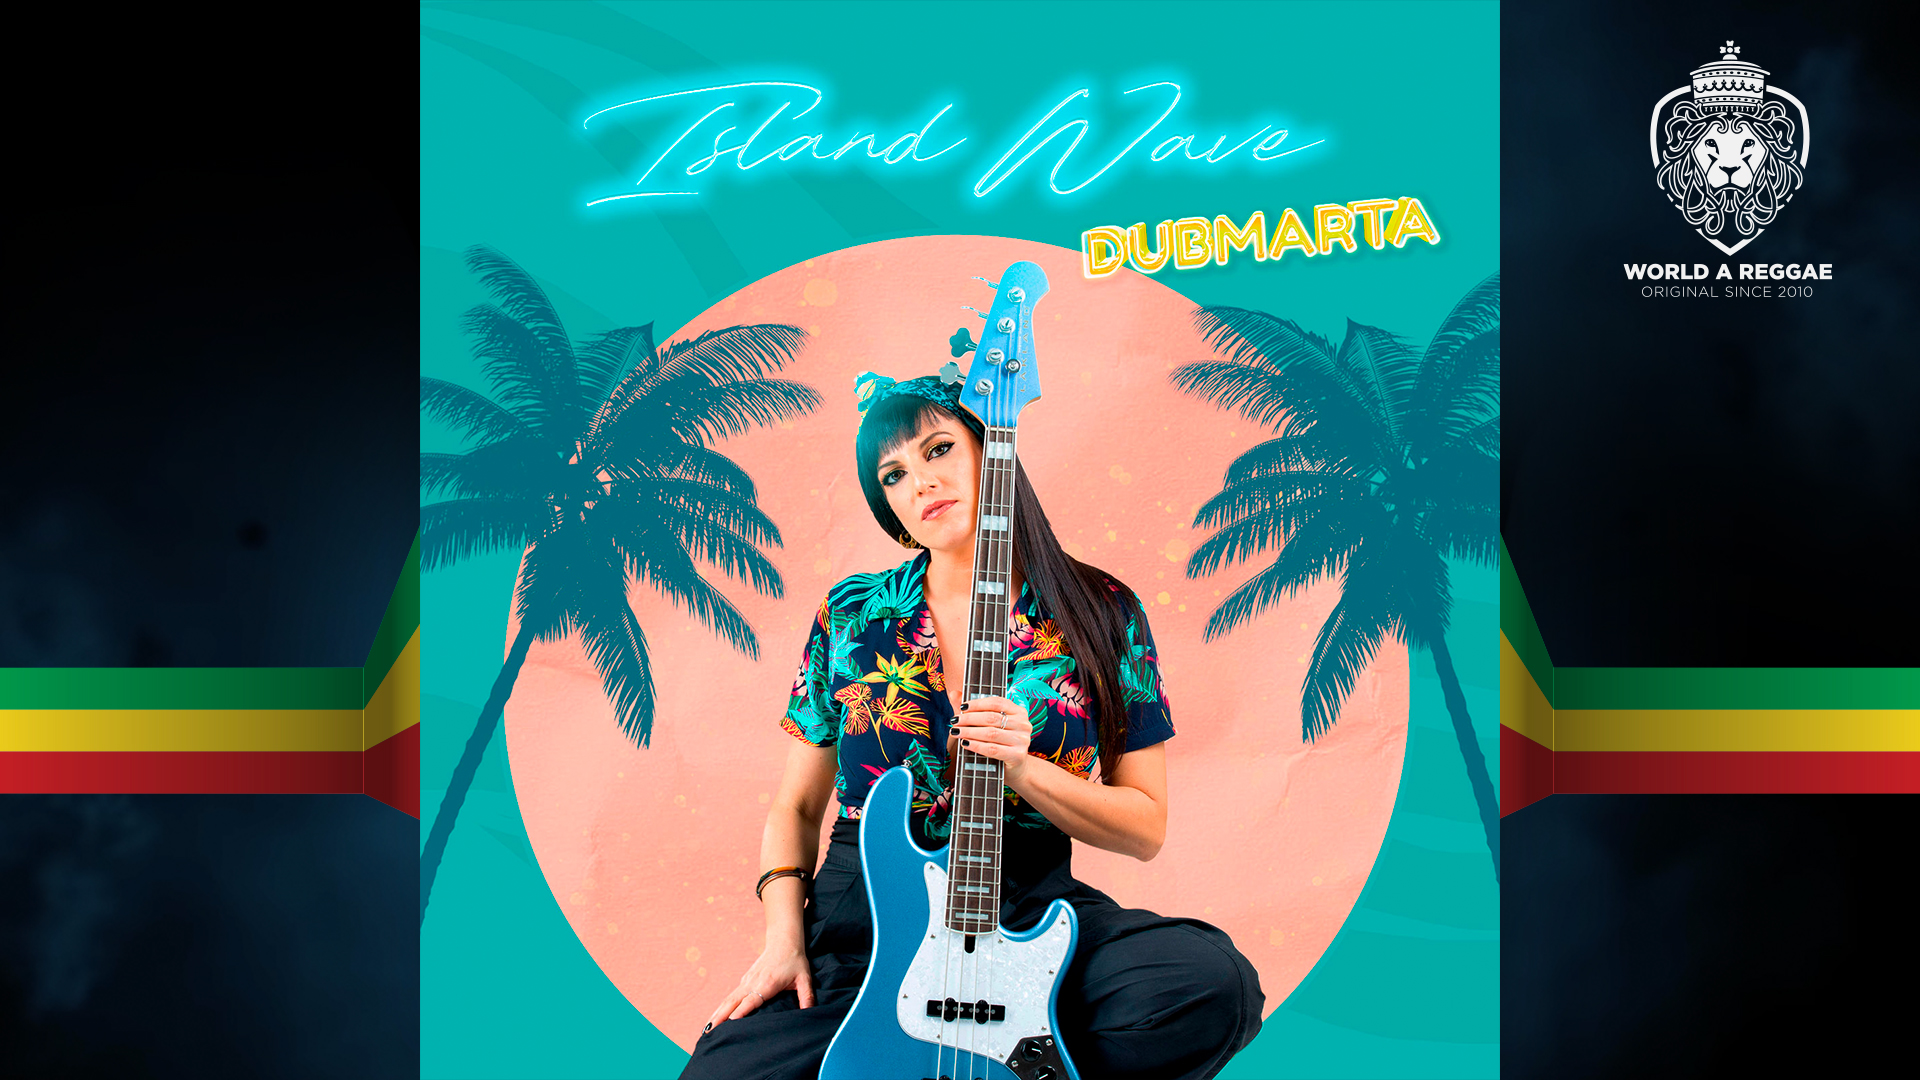 DubMarta presents her album Island Wave